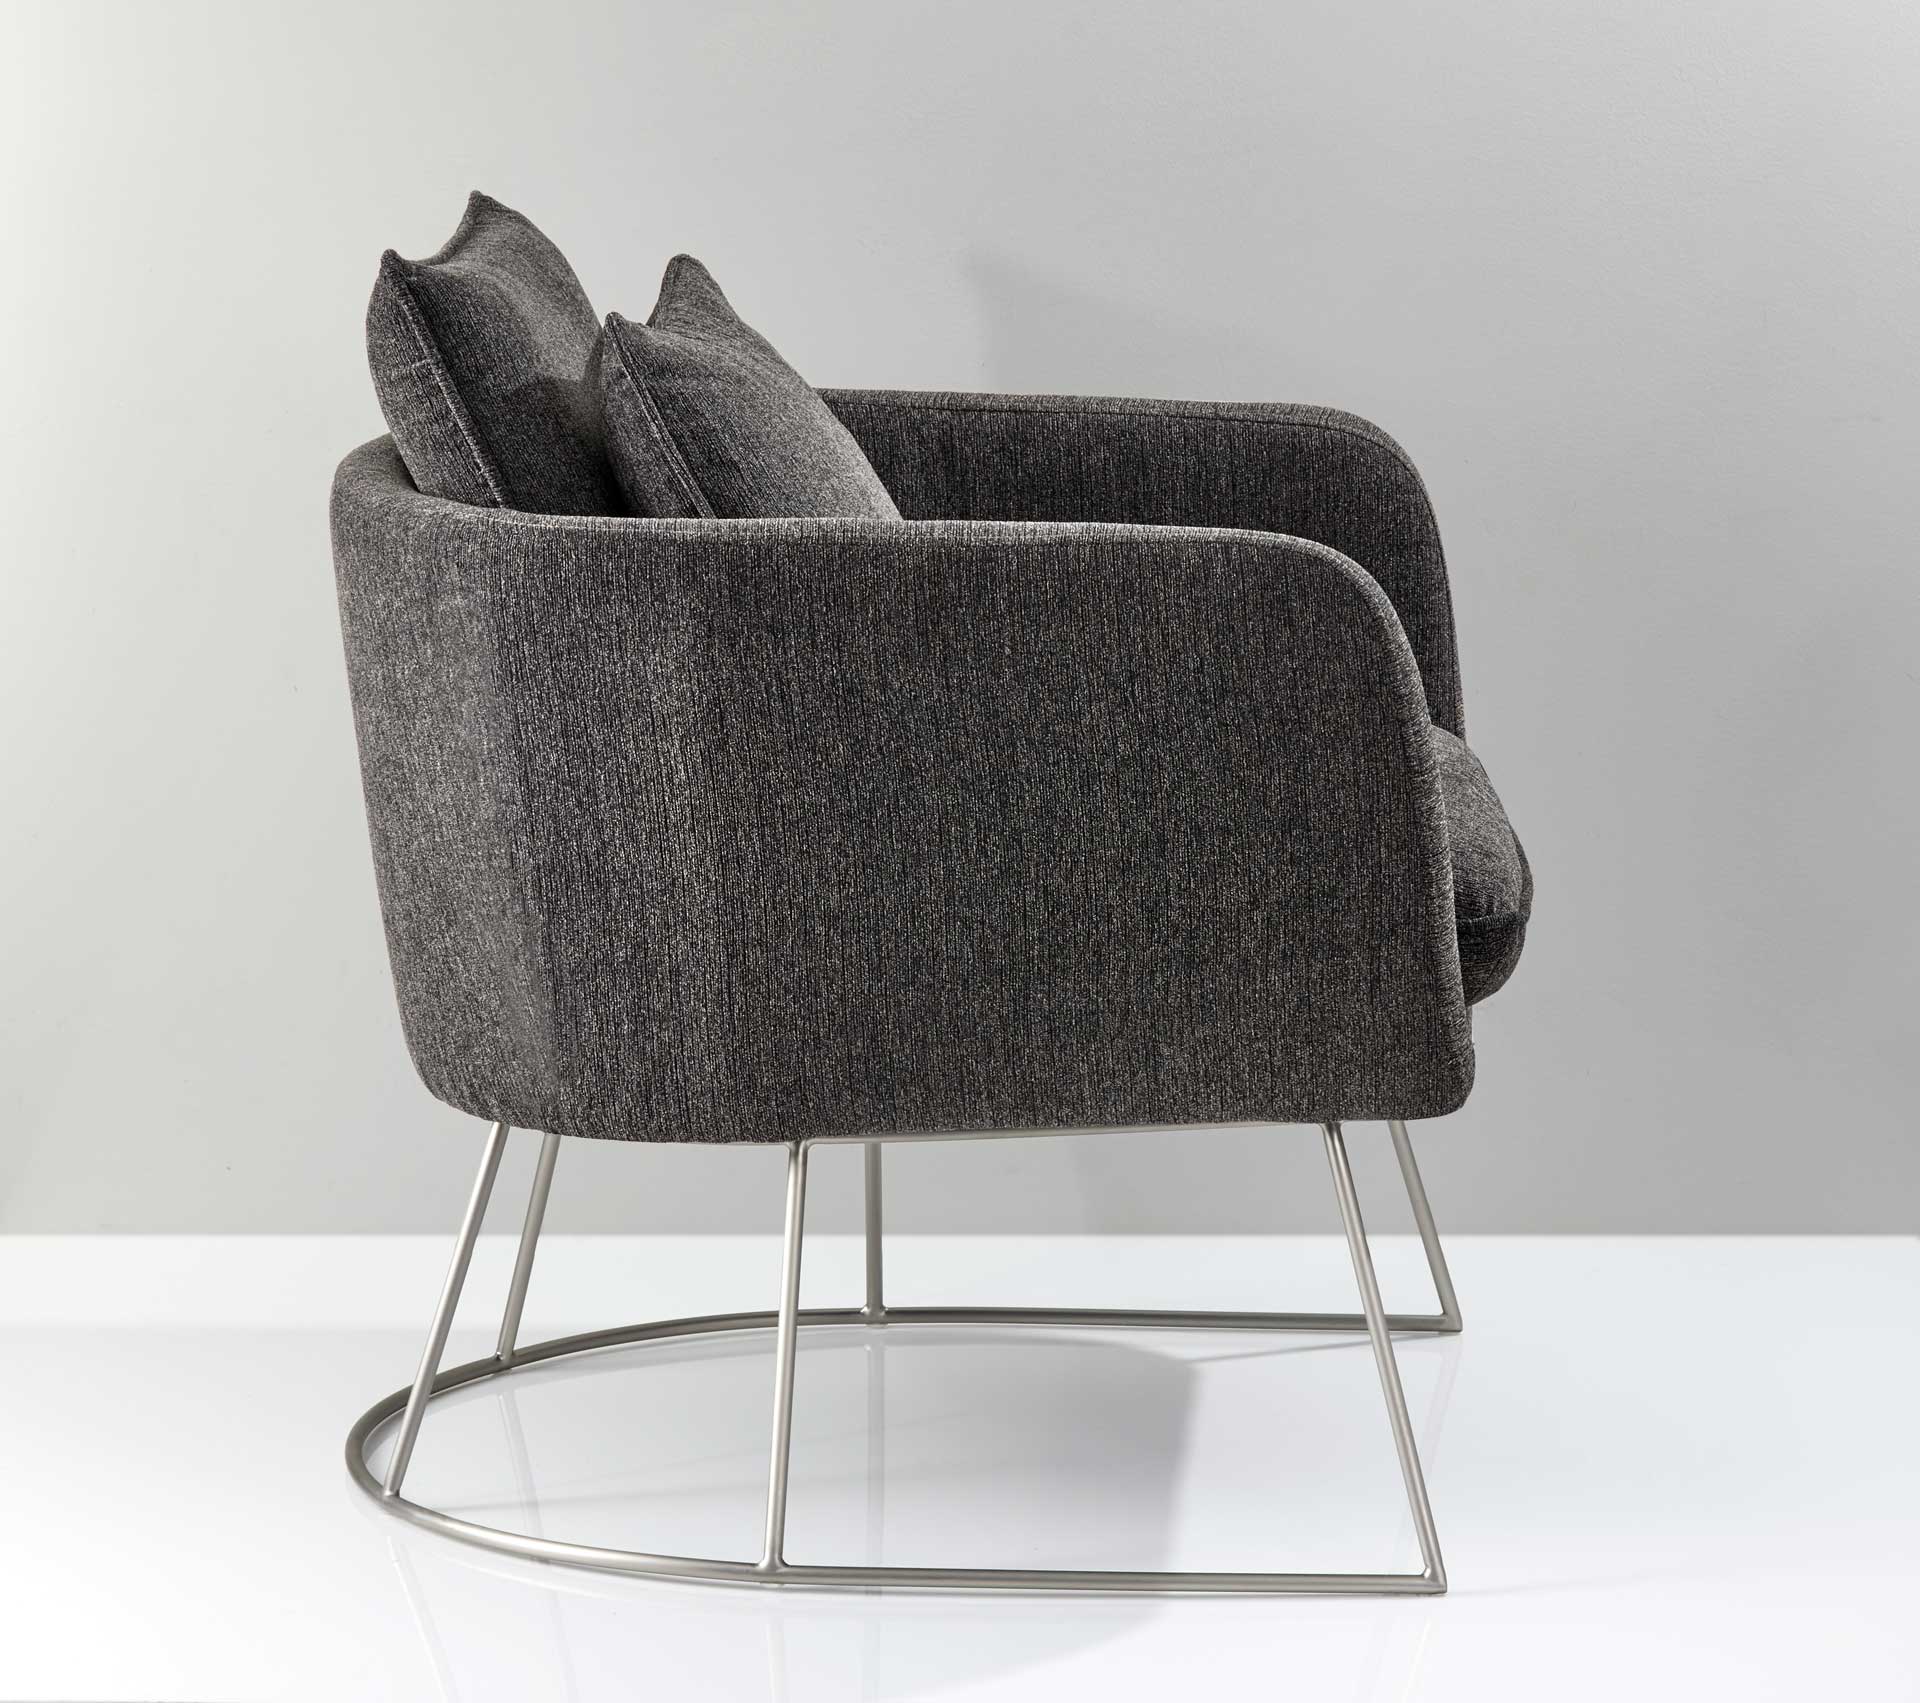 Steven Fabric Chair Dark Gray